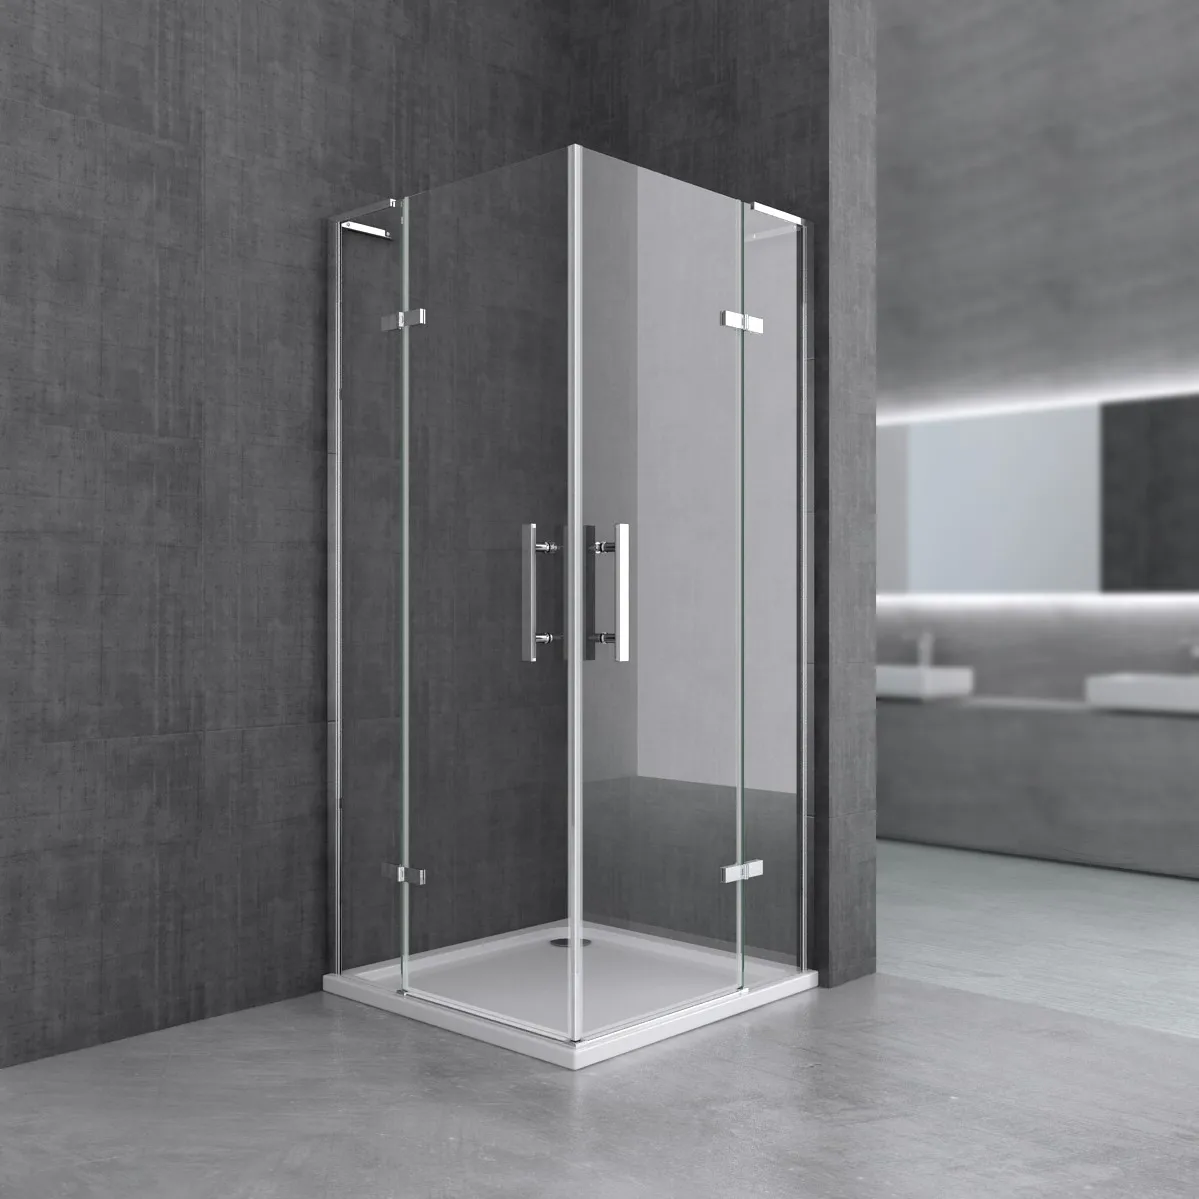 
New design high quality sliding bathroom enclosure tempered glass shower room shower cabin steam  (1600223053062)